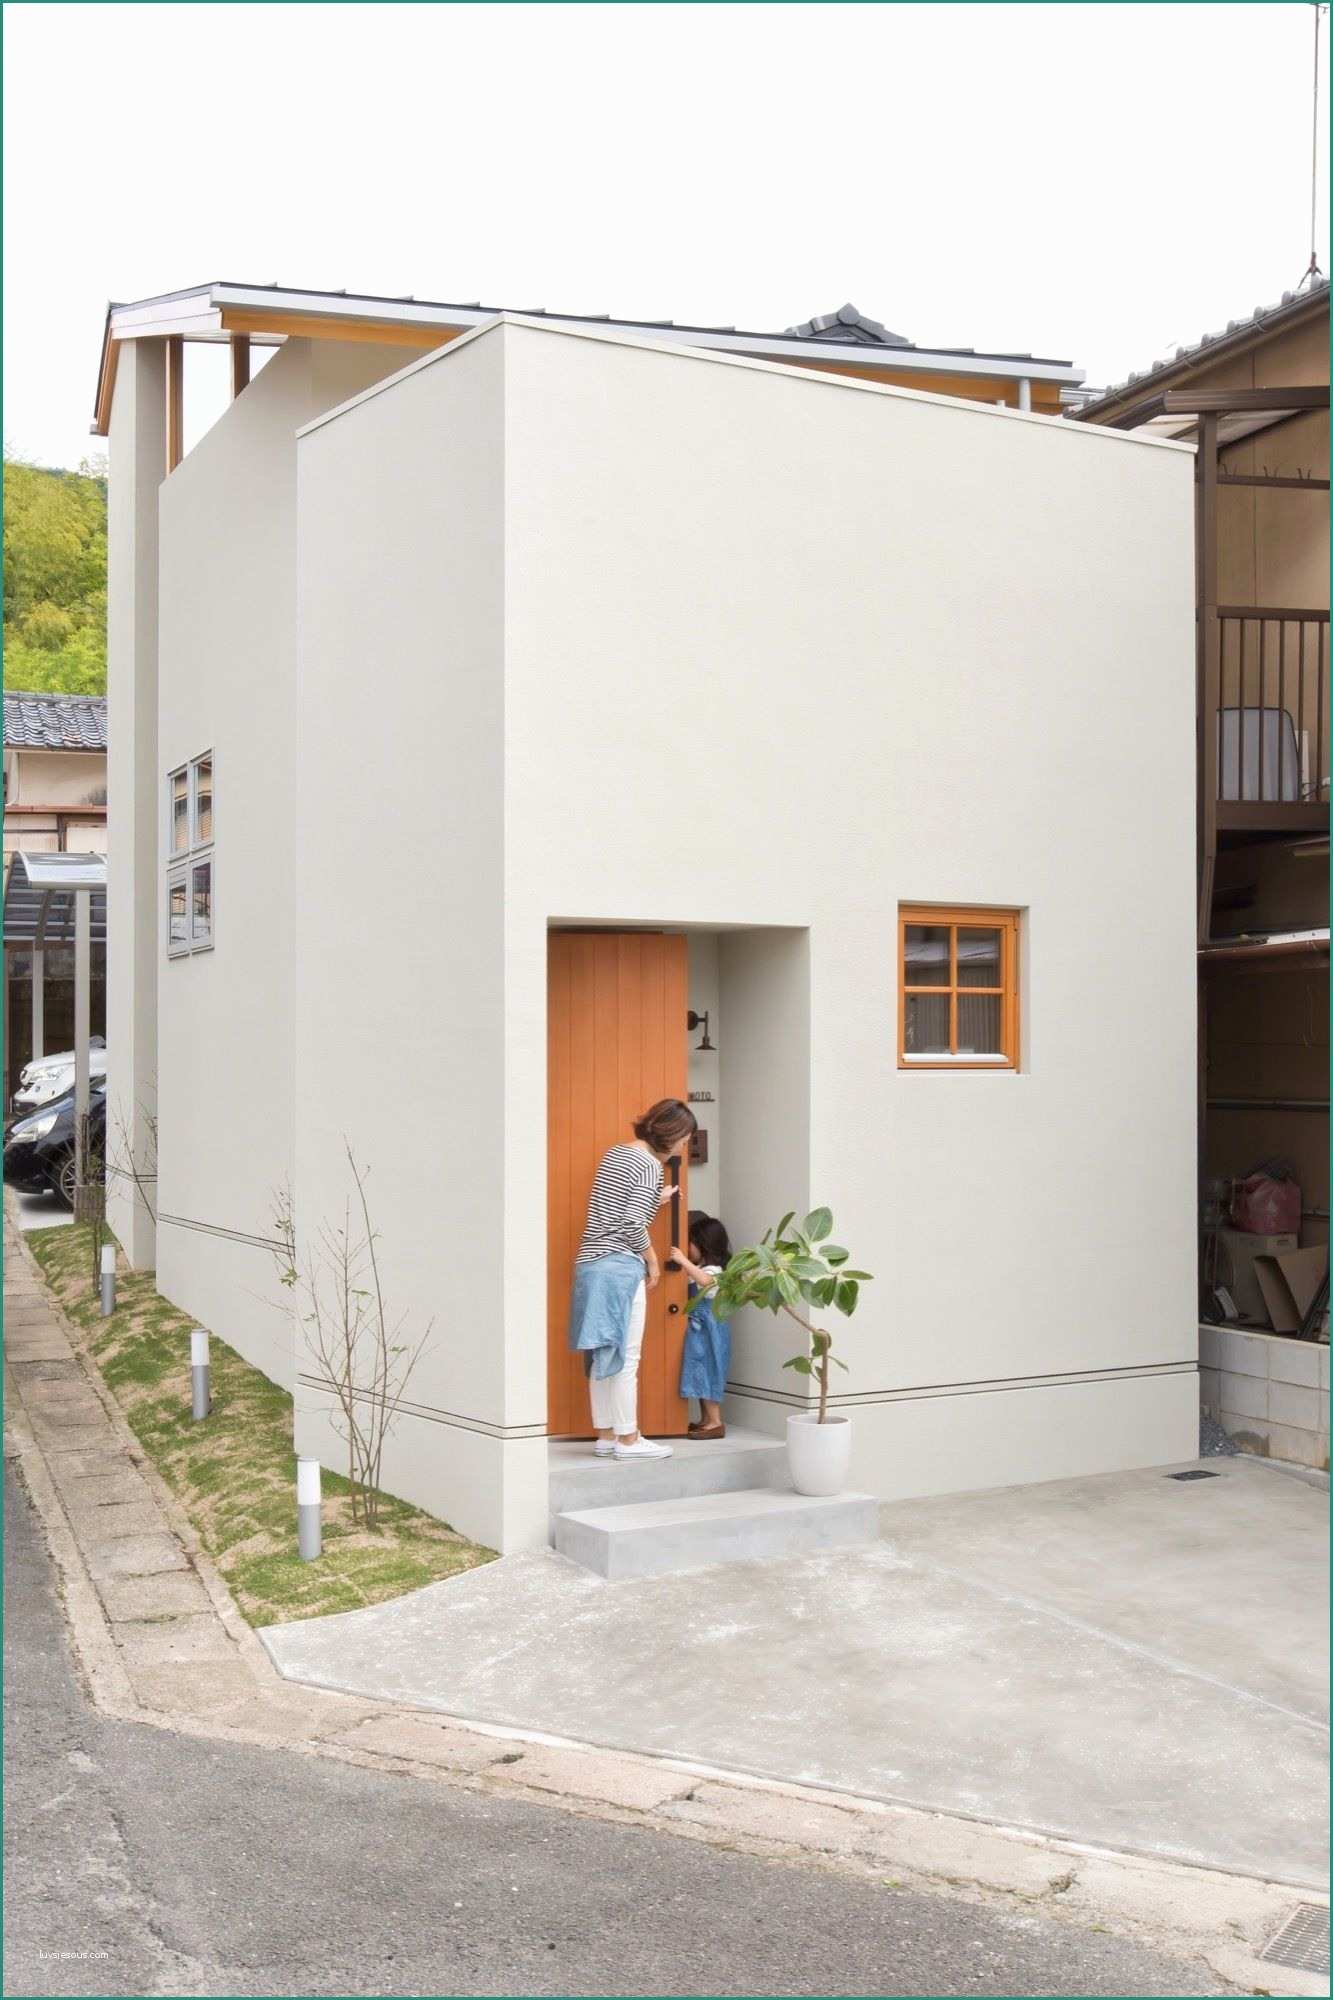 Case Moderne Progetti E Gallery Of Yamashina House Alts Design Fice 2 In 2018